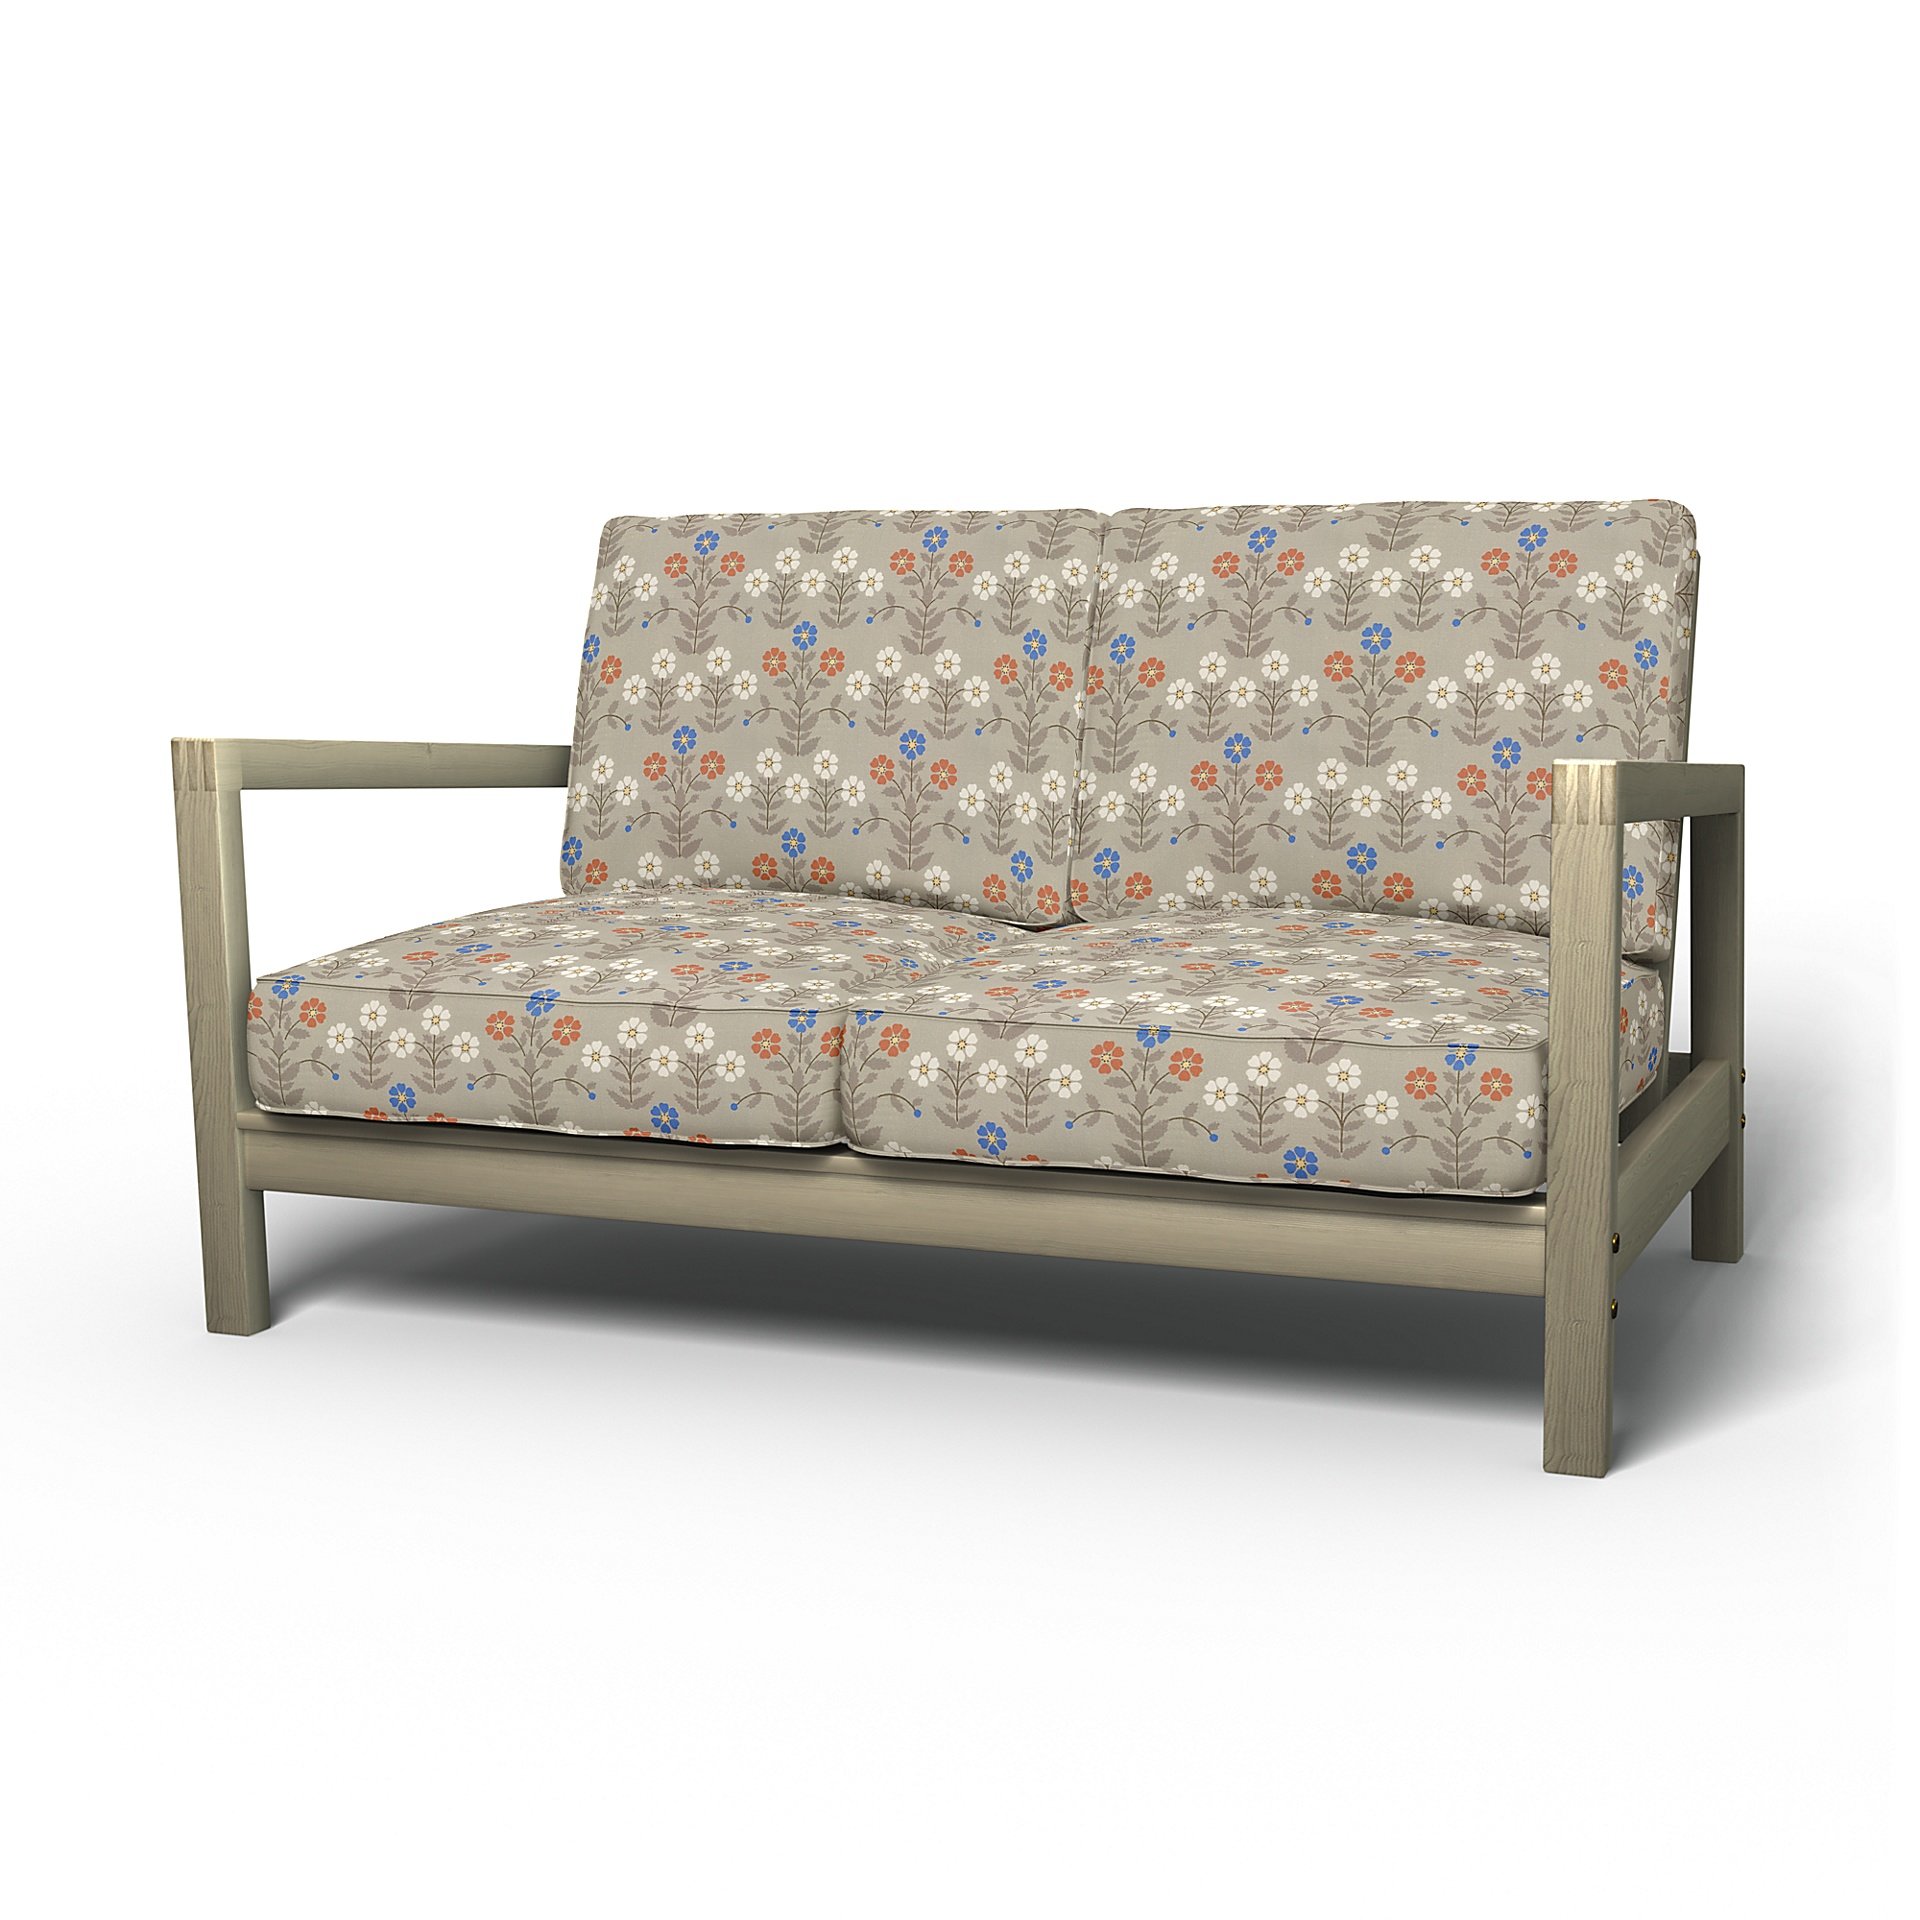 IKEA - Lillberg 2 Seater Sofa Cover, Sippor Blue/Orange, BEMZ x BORASTAPETER COLLECTION - Bemz